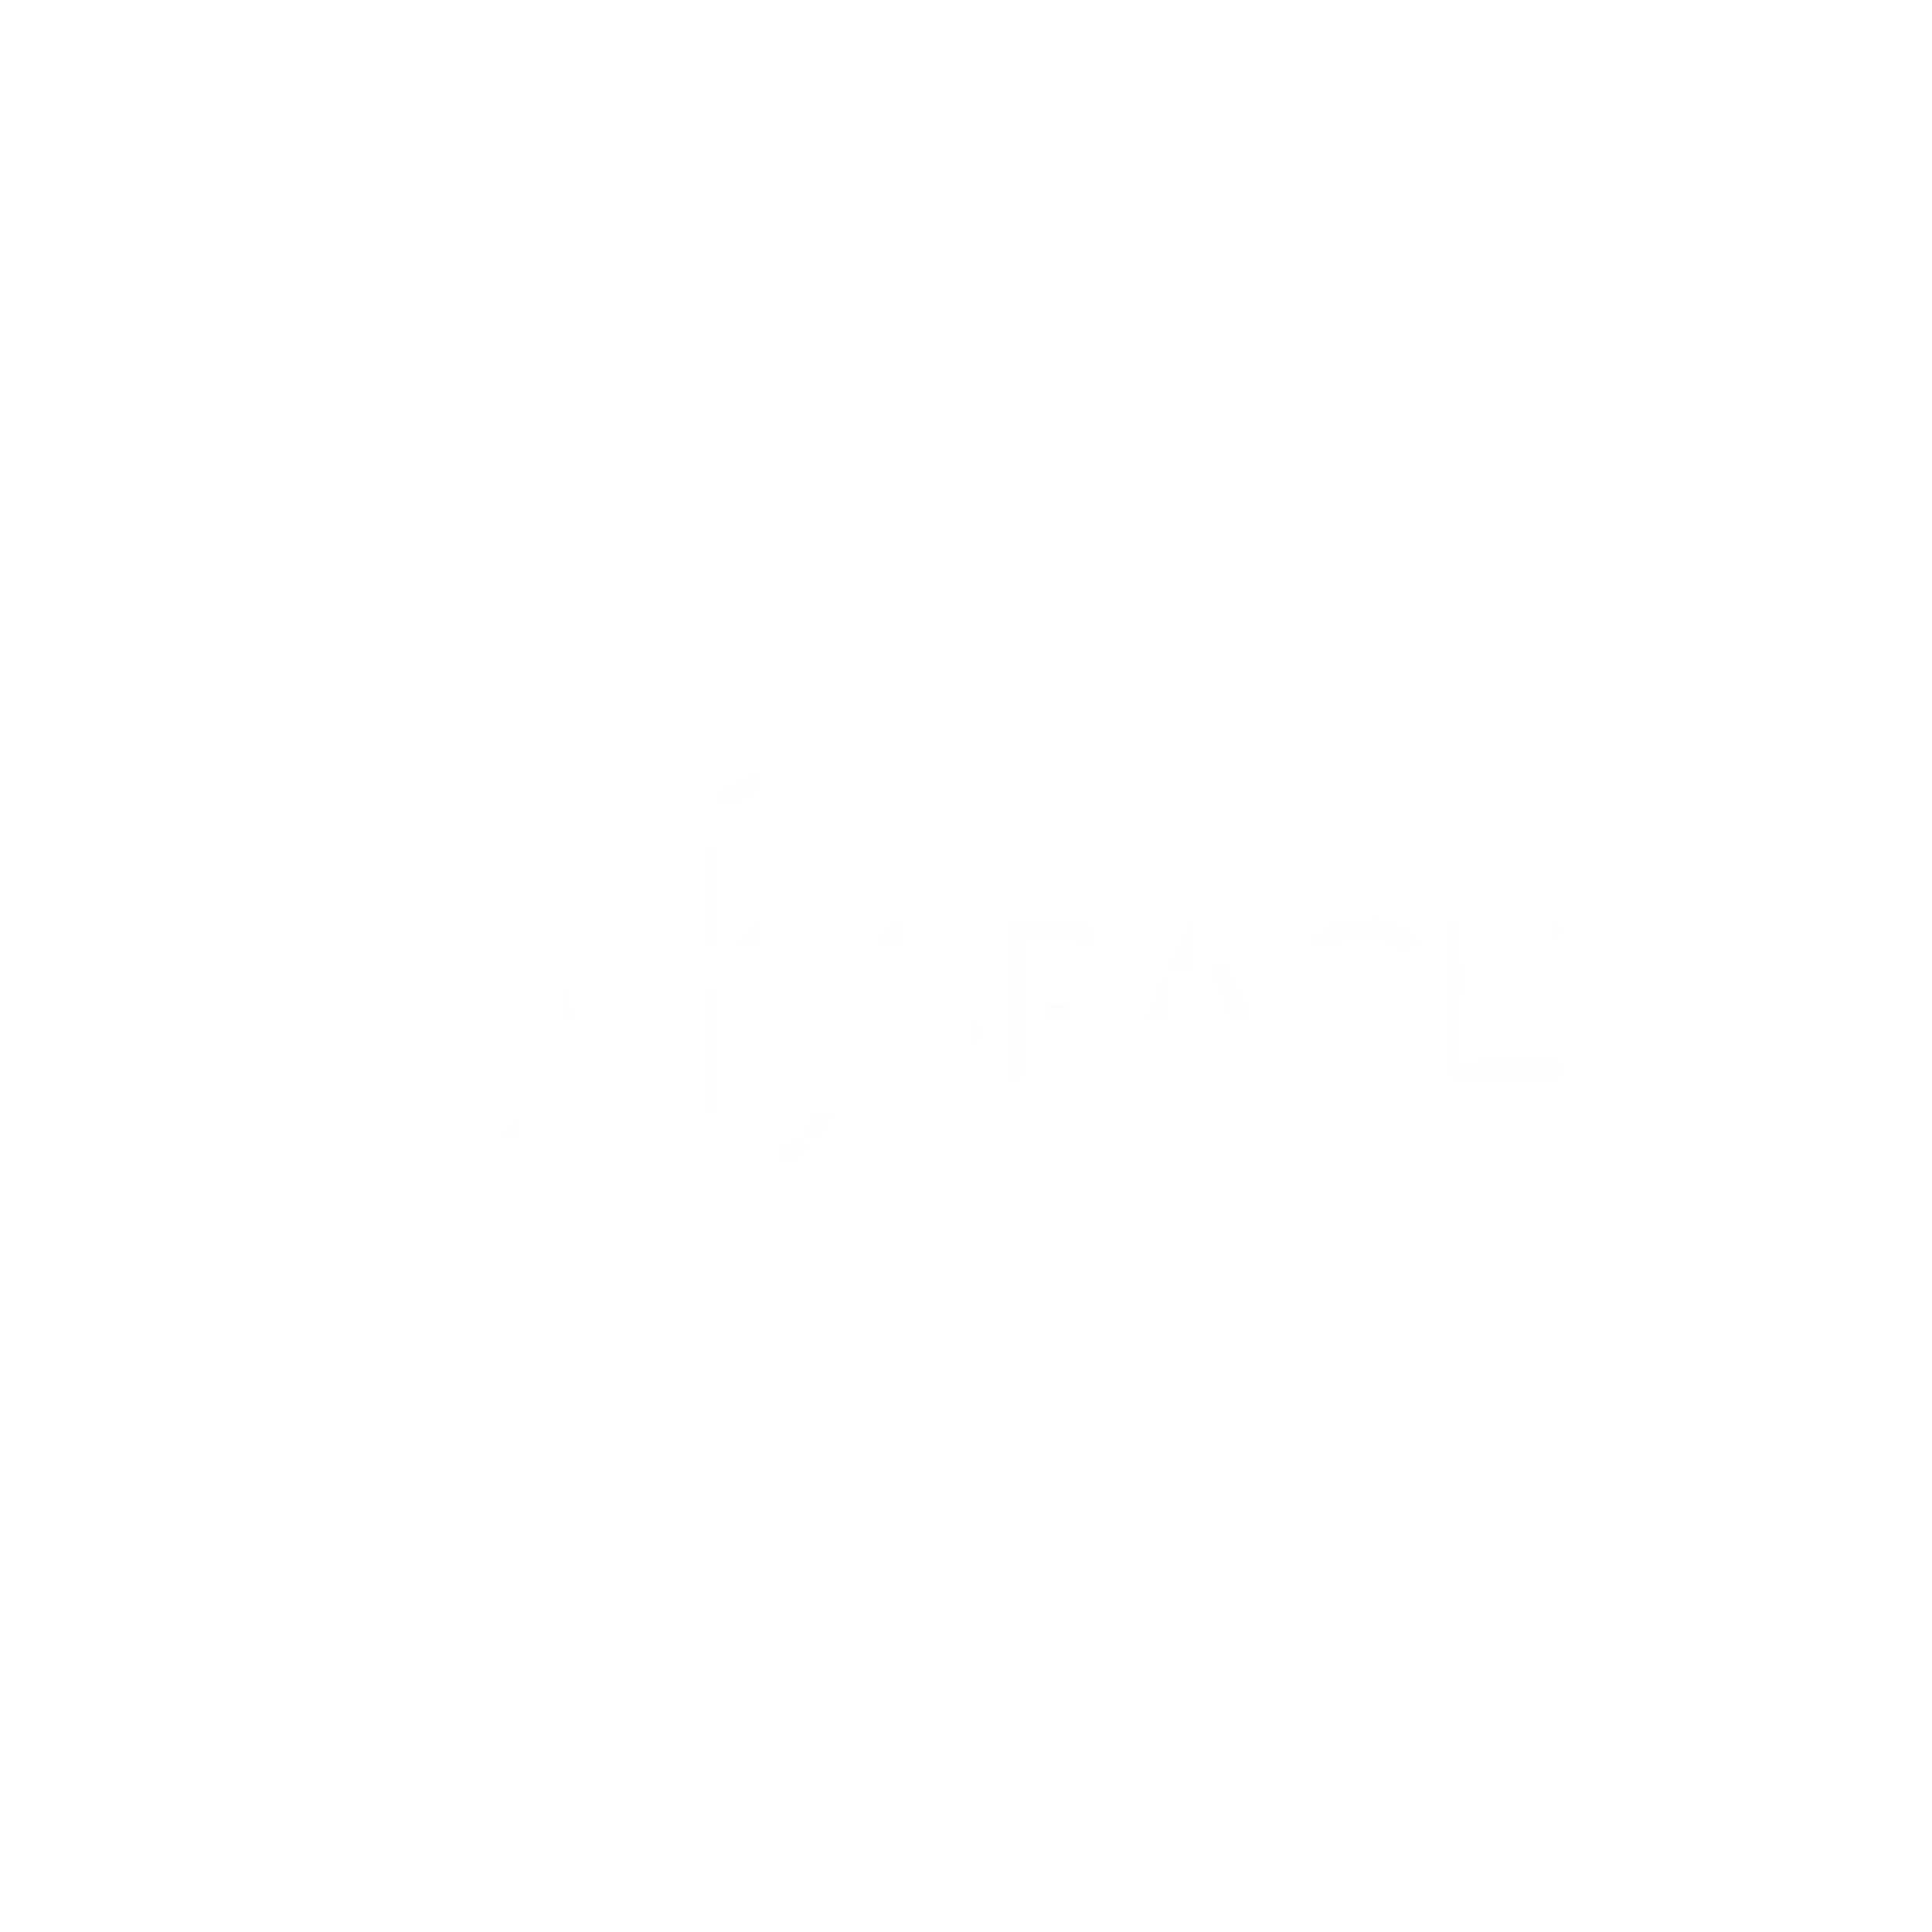 Mspace